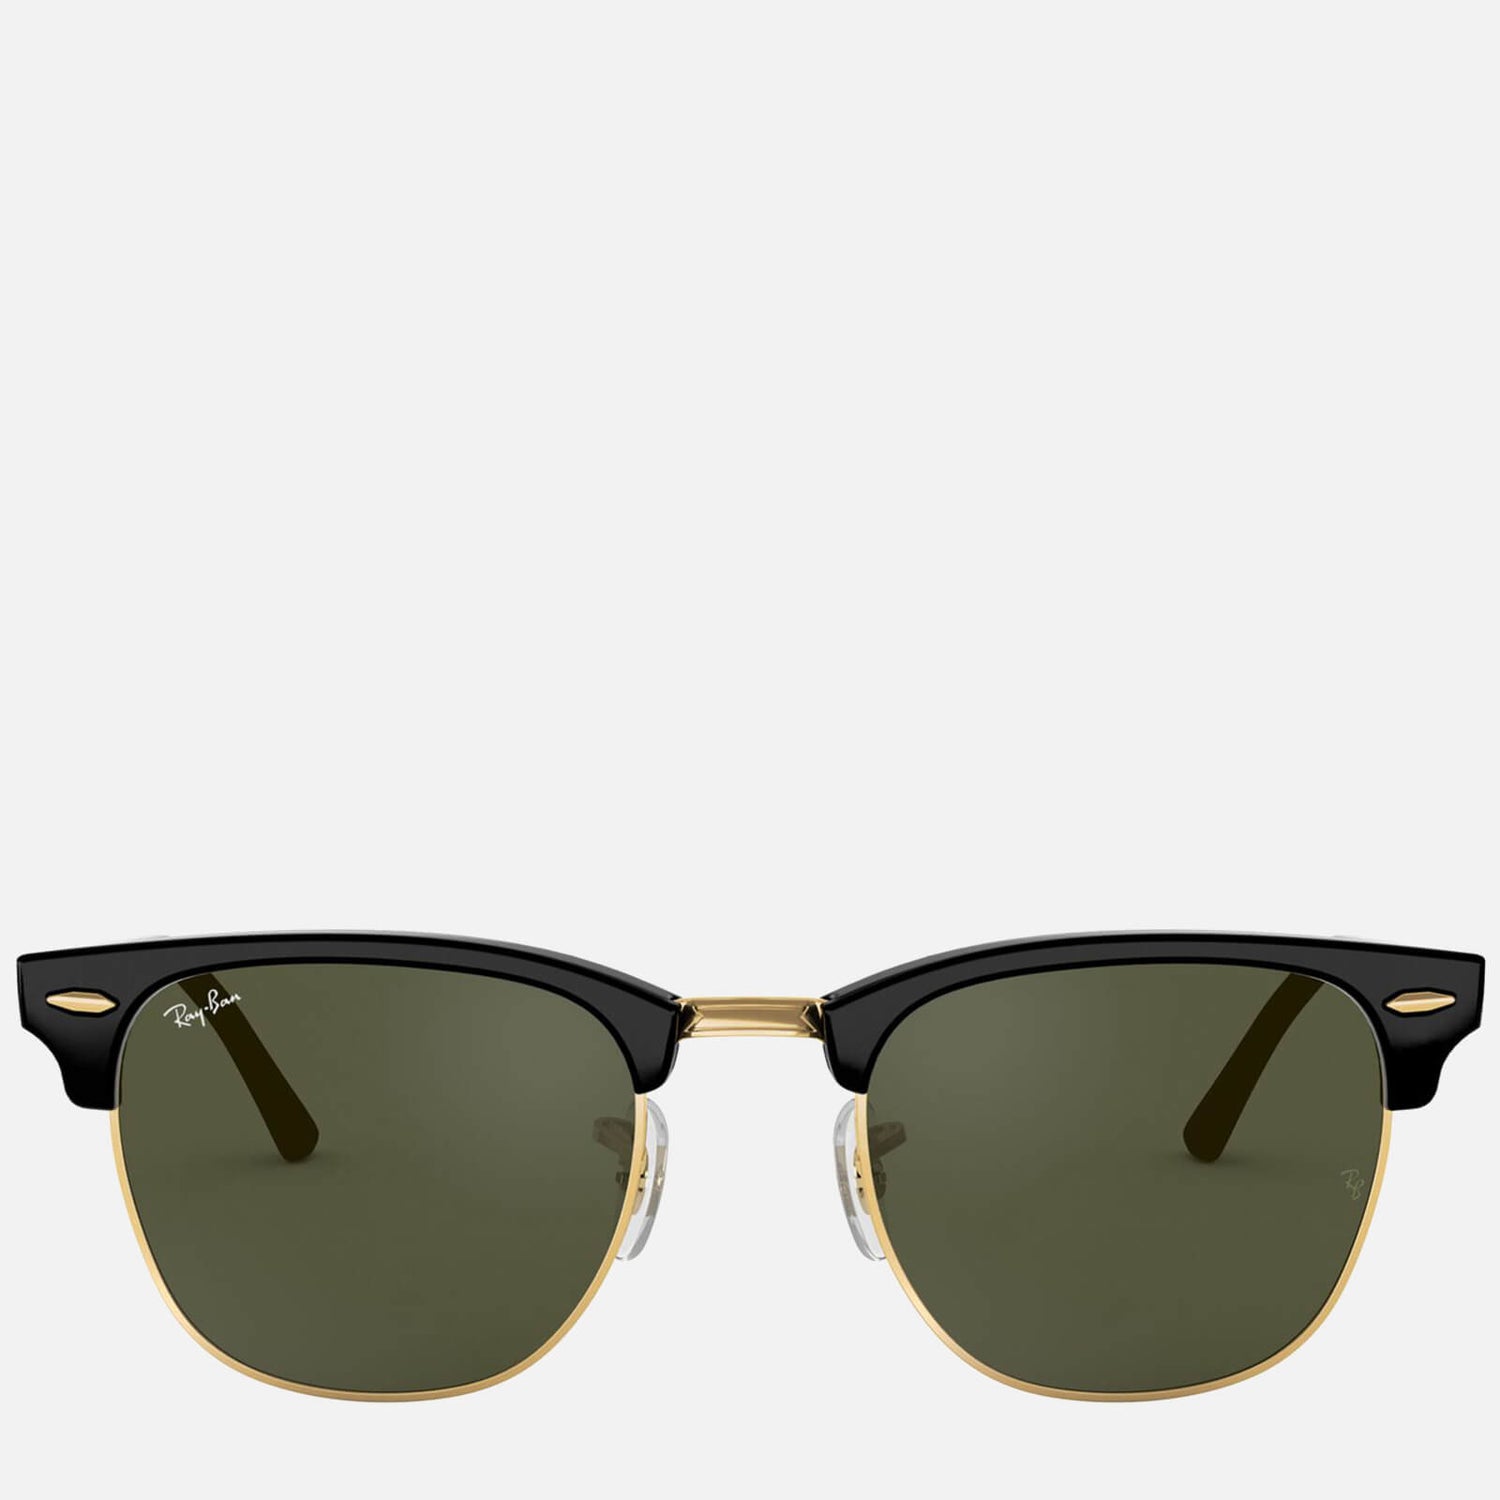 Ray-Ban Clubmaster Sunglasses - Black